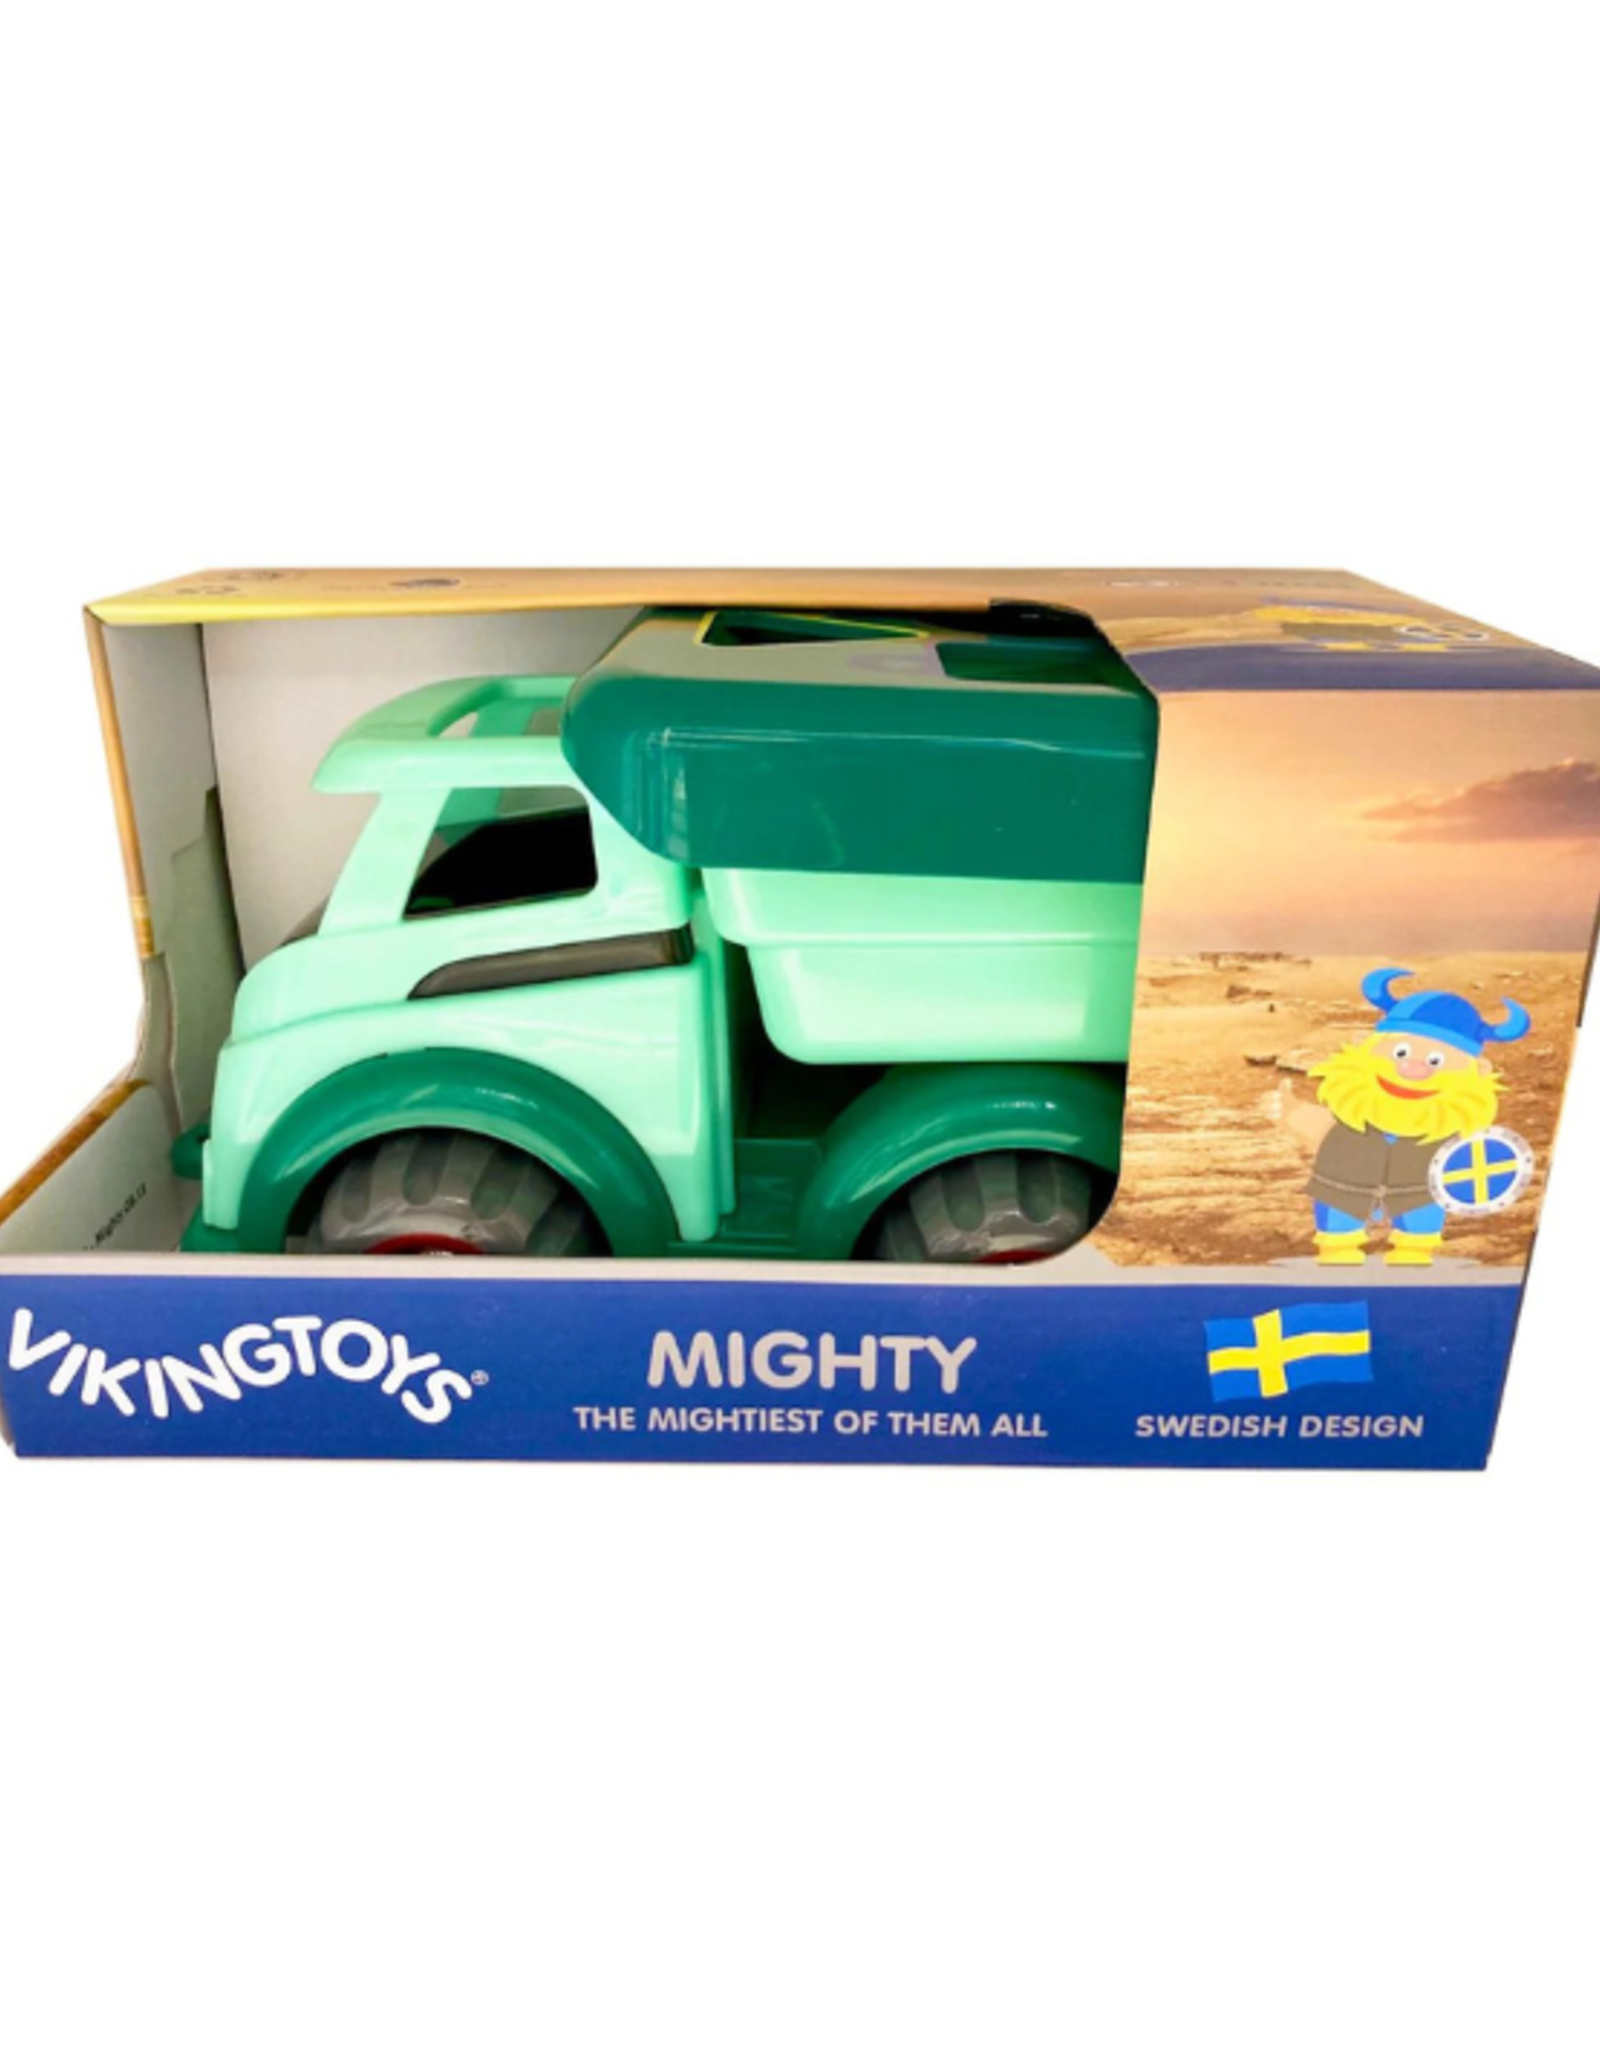 Vikingtoys Viking Toys - Mighty Shape Sorter Truck